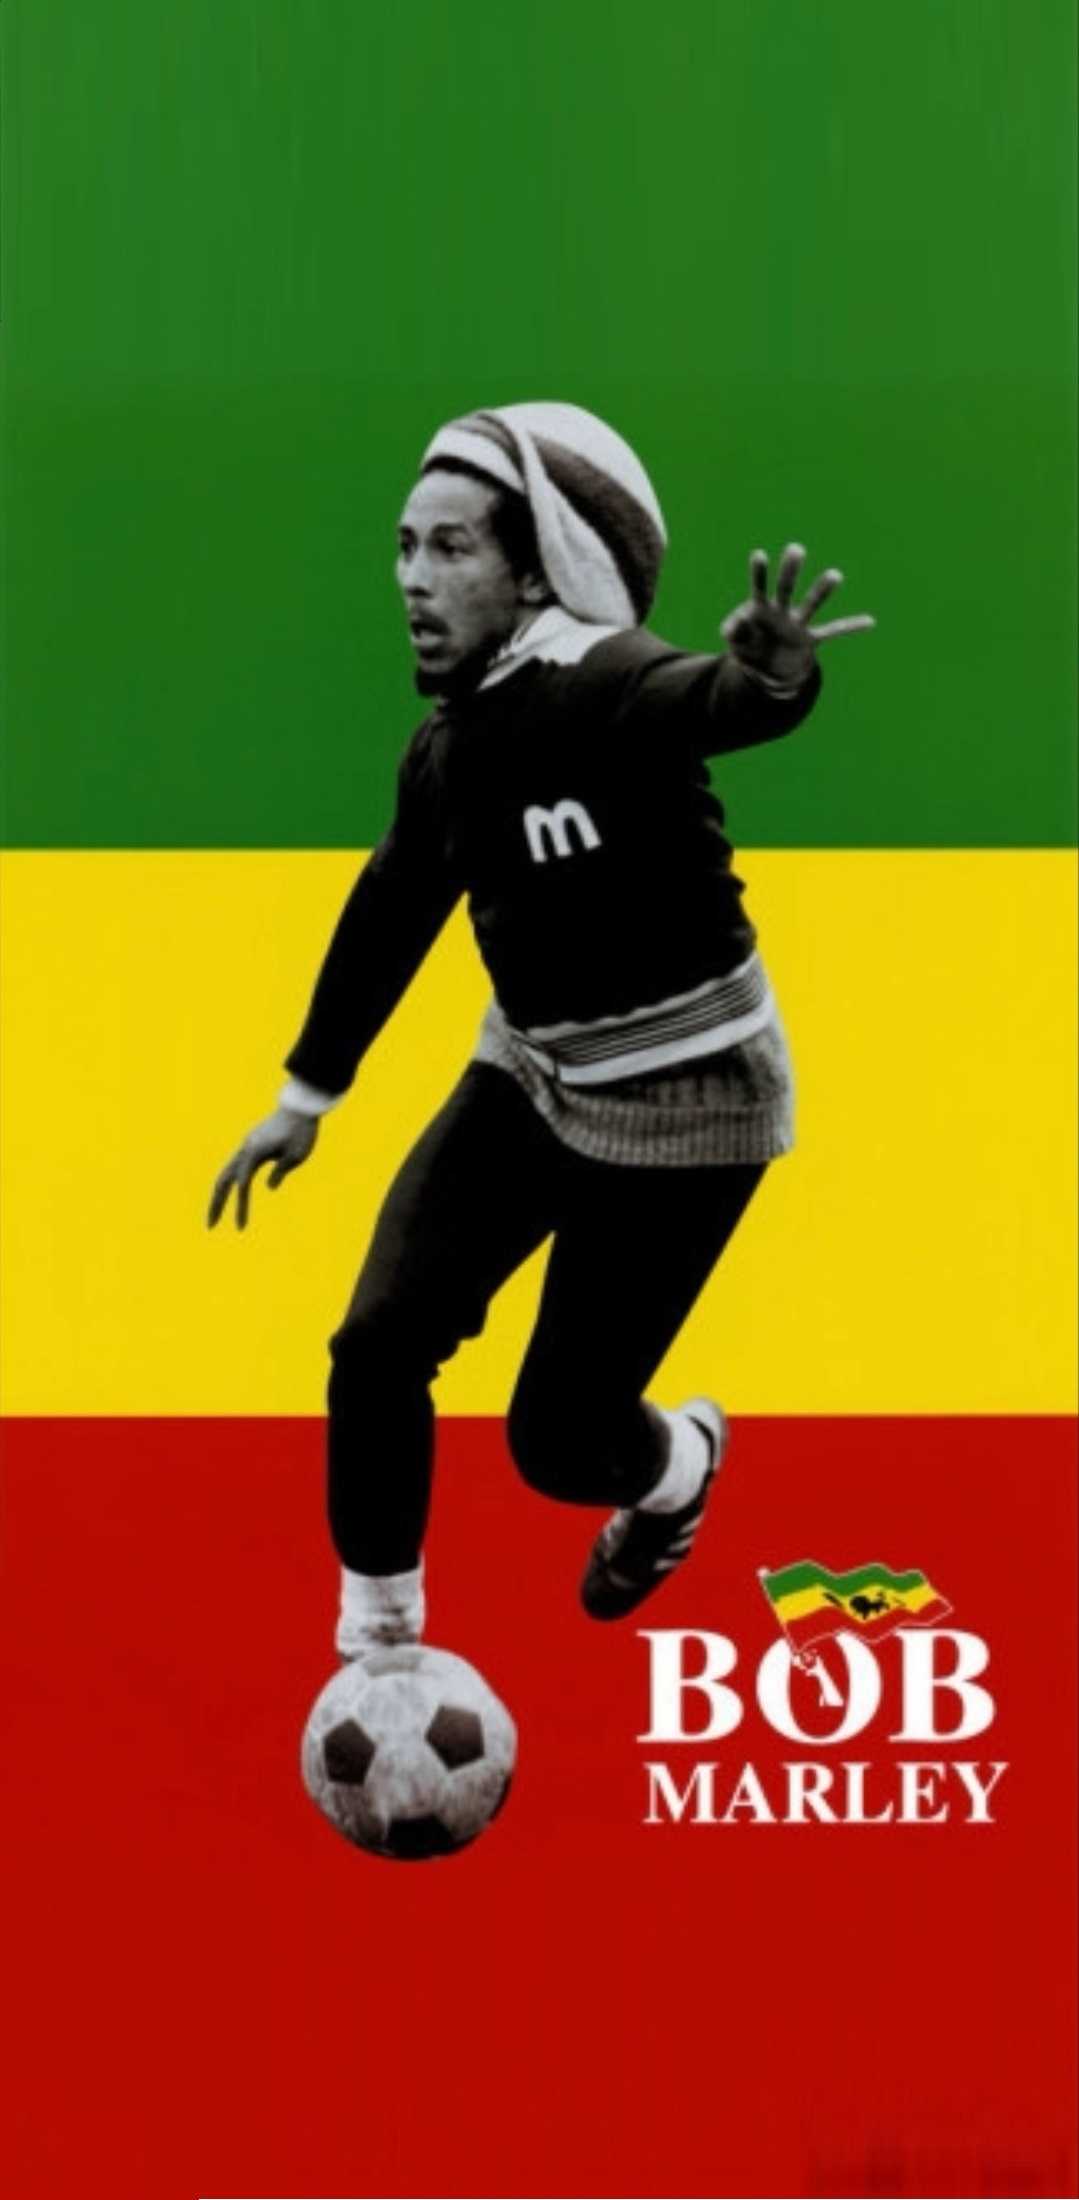 Bob Marley Wallpaper Hd 1